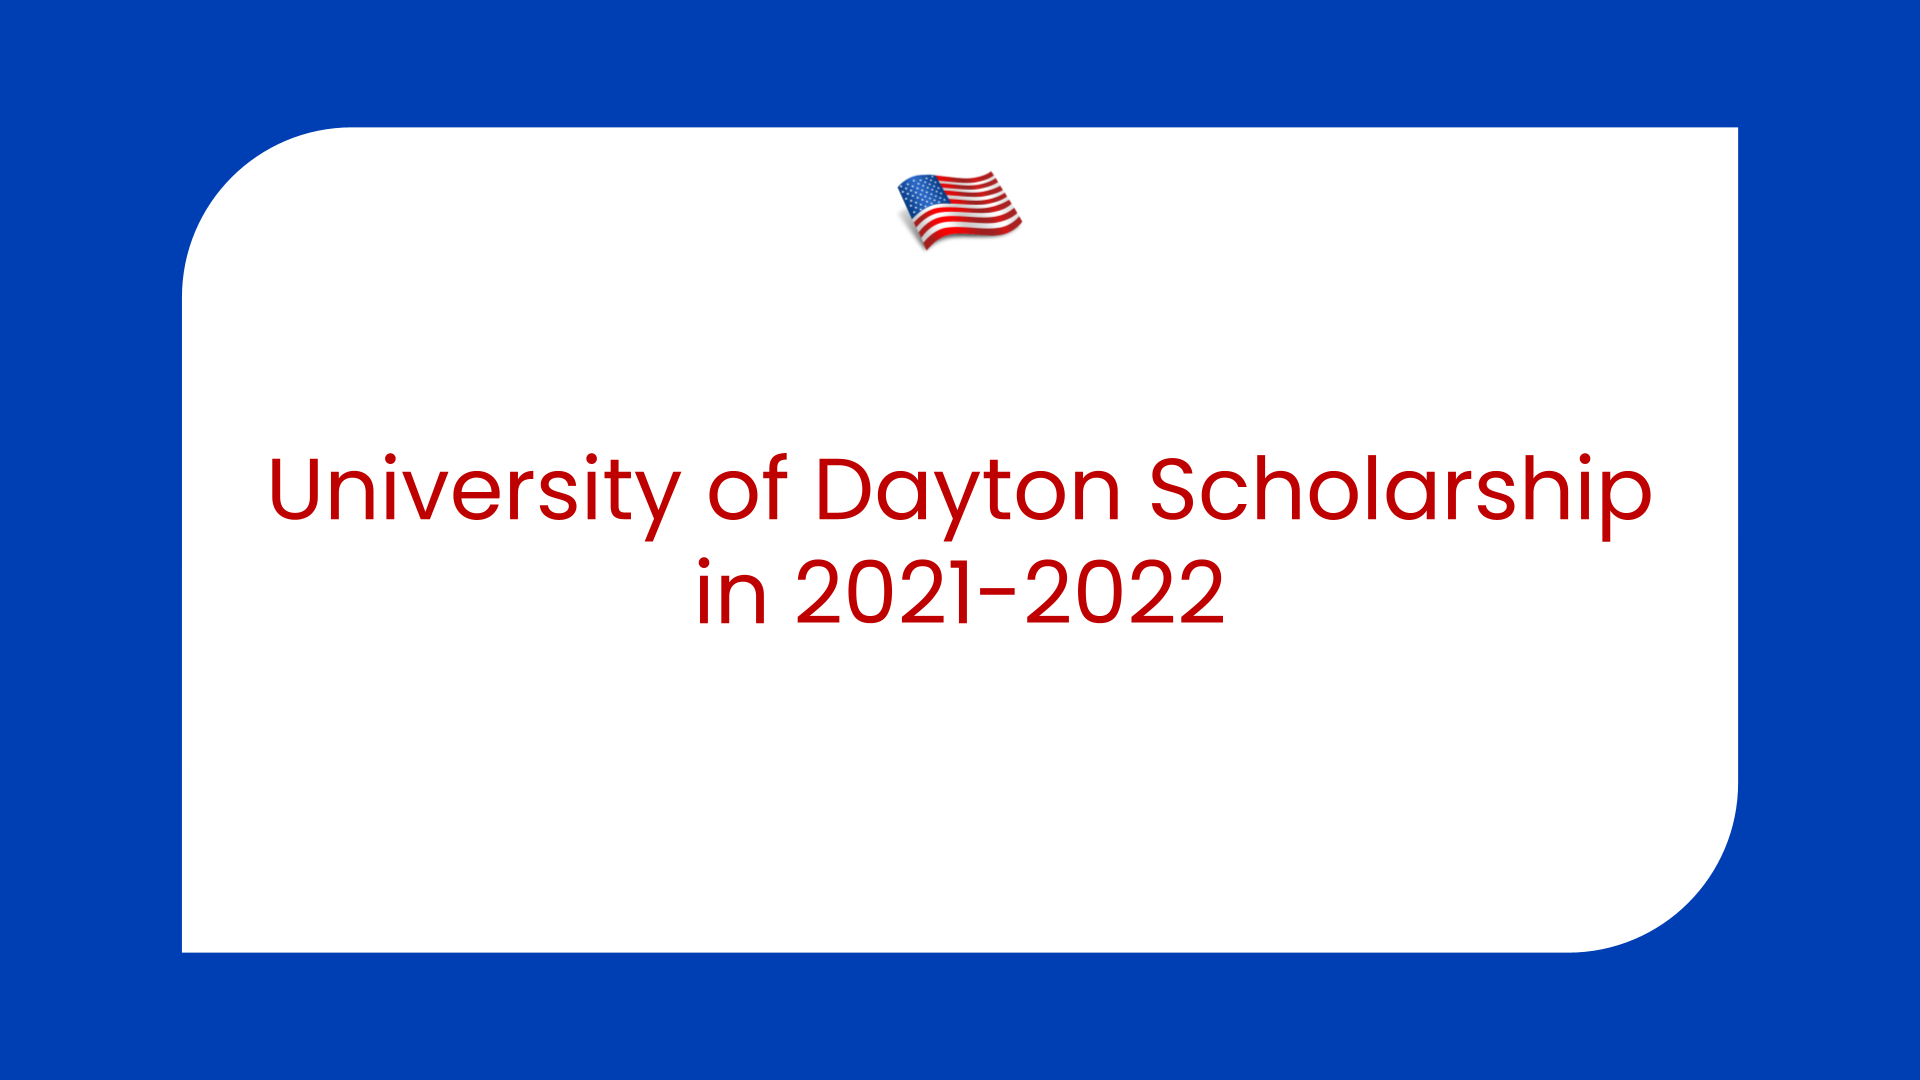 University of Dayton Scholarship in the USA in 2021-2022